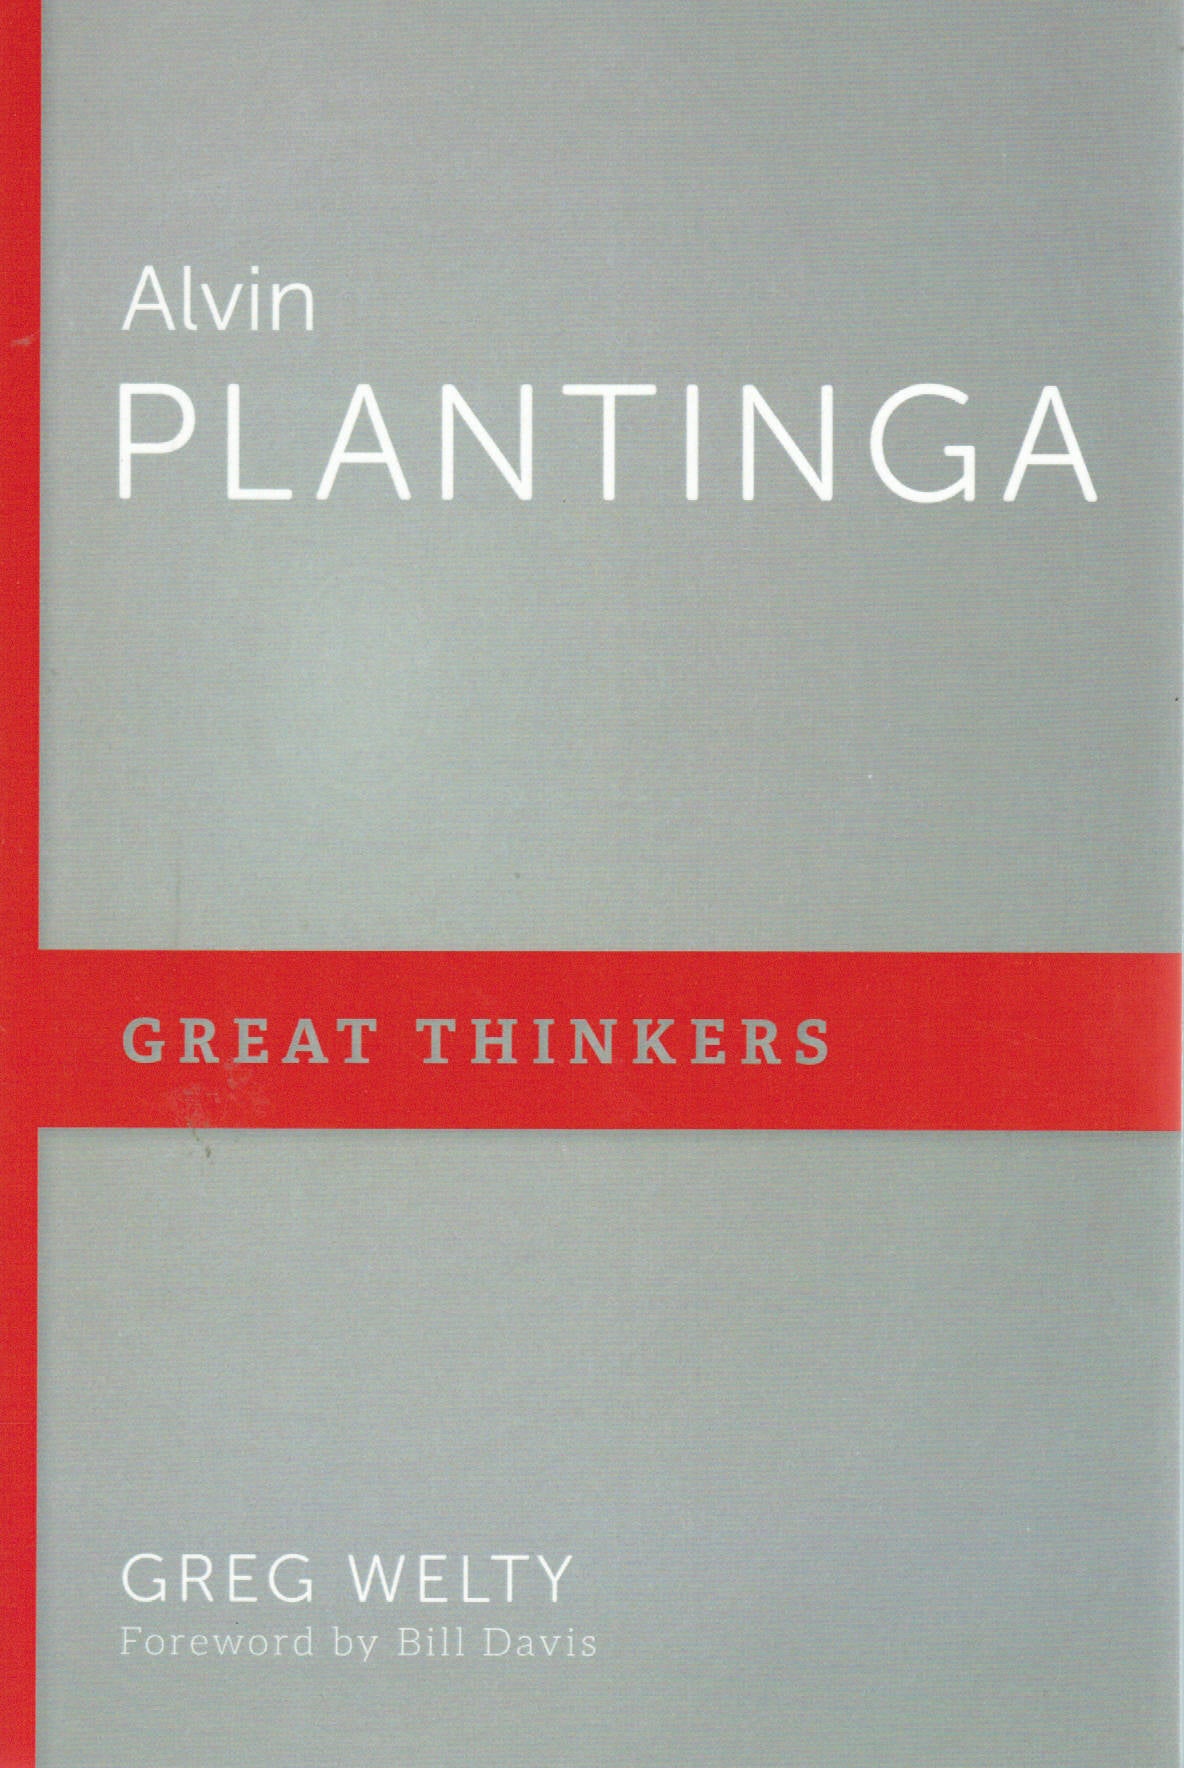 Great Thinkers - Alvin Plantinga